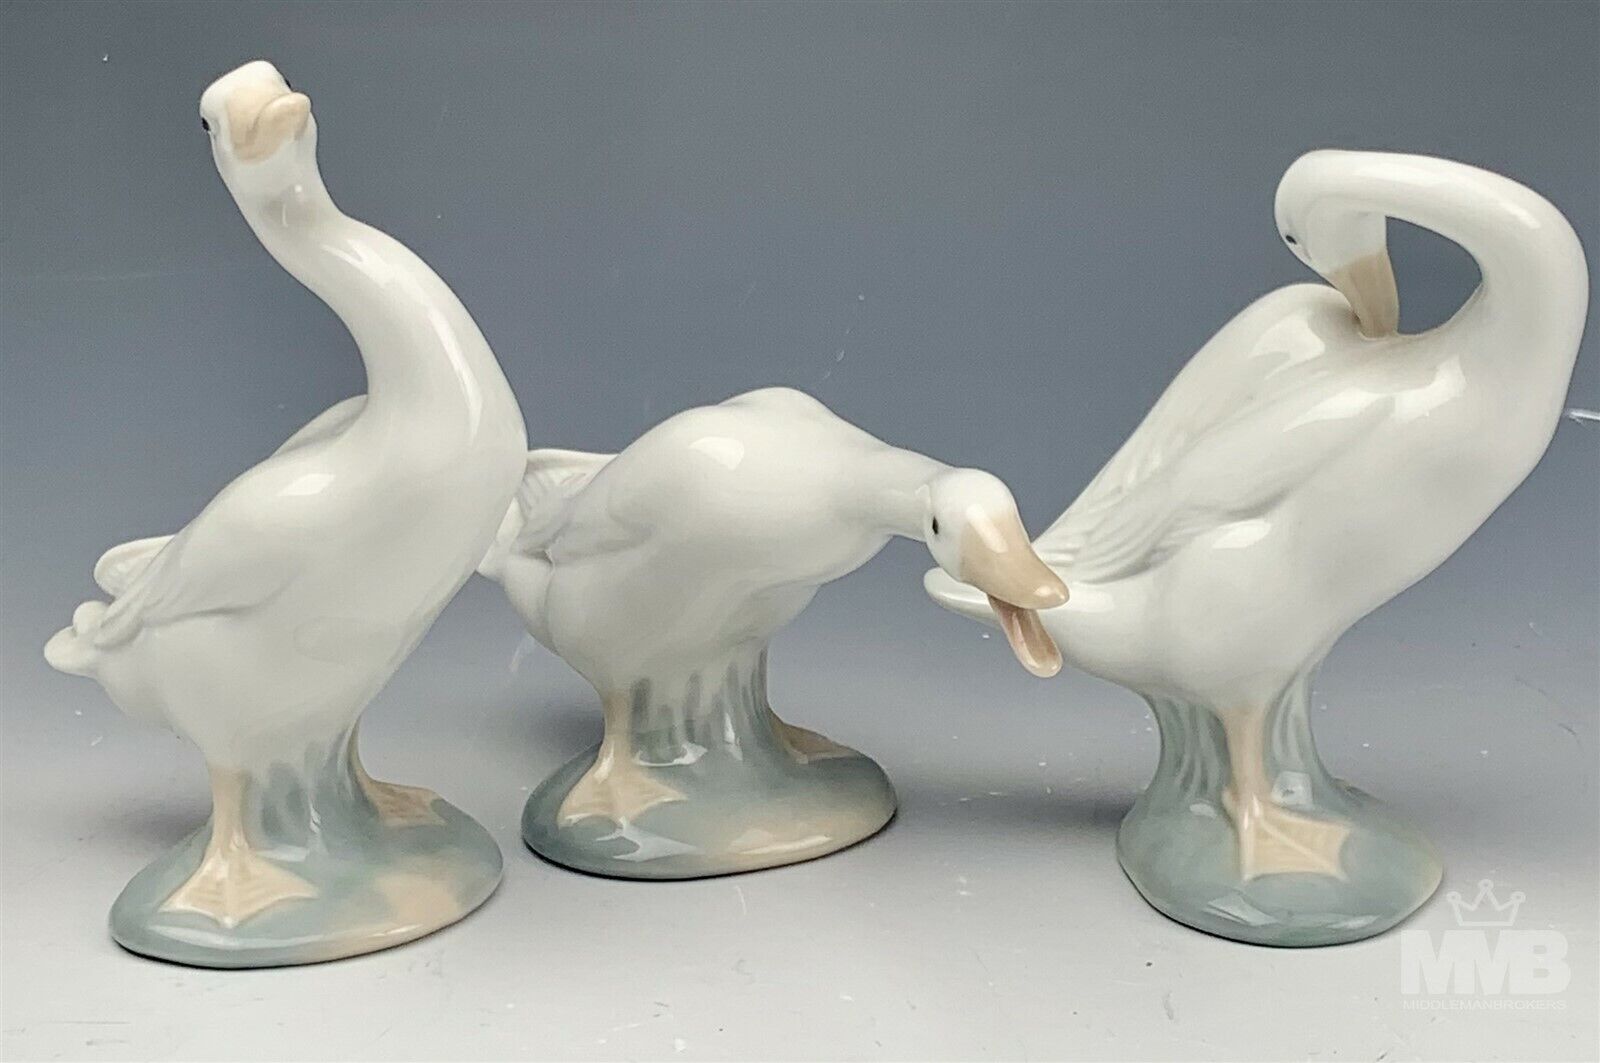 VTG Lot of 3 Retired Lladro Spain Painted Signed Porcelain Duck